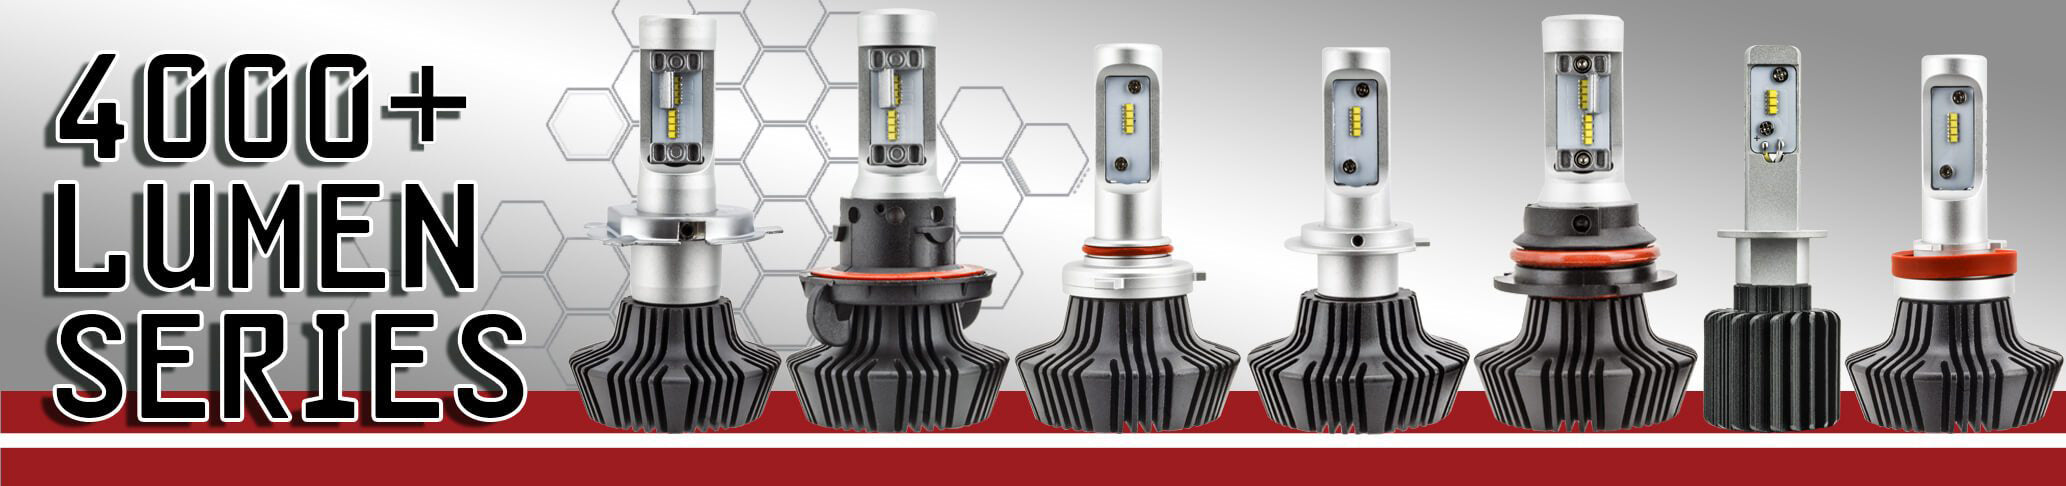 ORACLE Lighting H11 - 4,000+ Lumen LED Light Bulb Conversion Kit High/